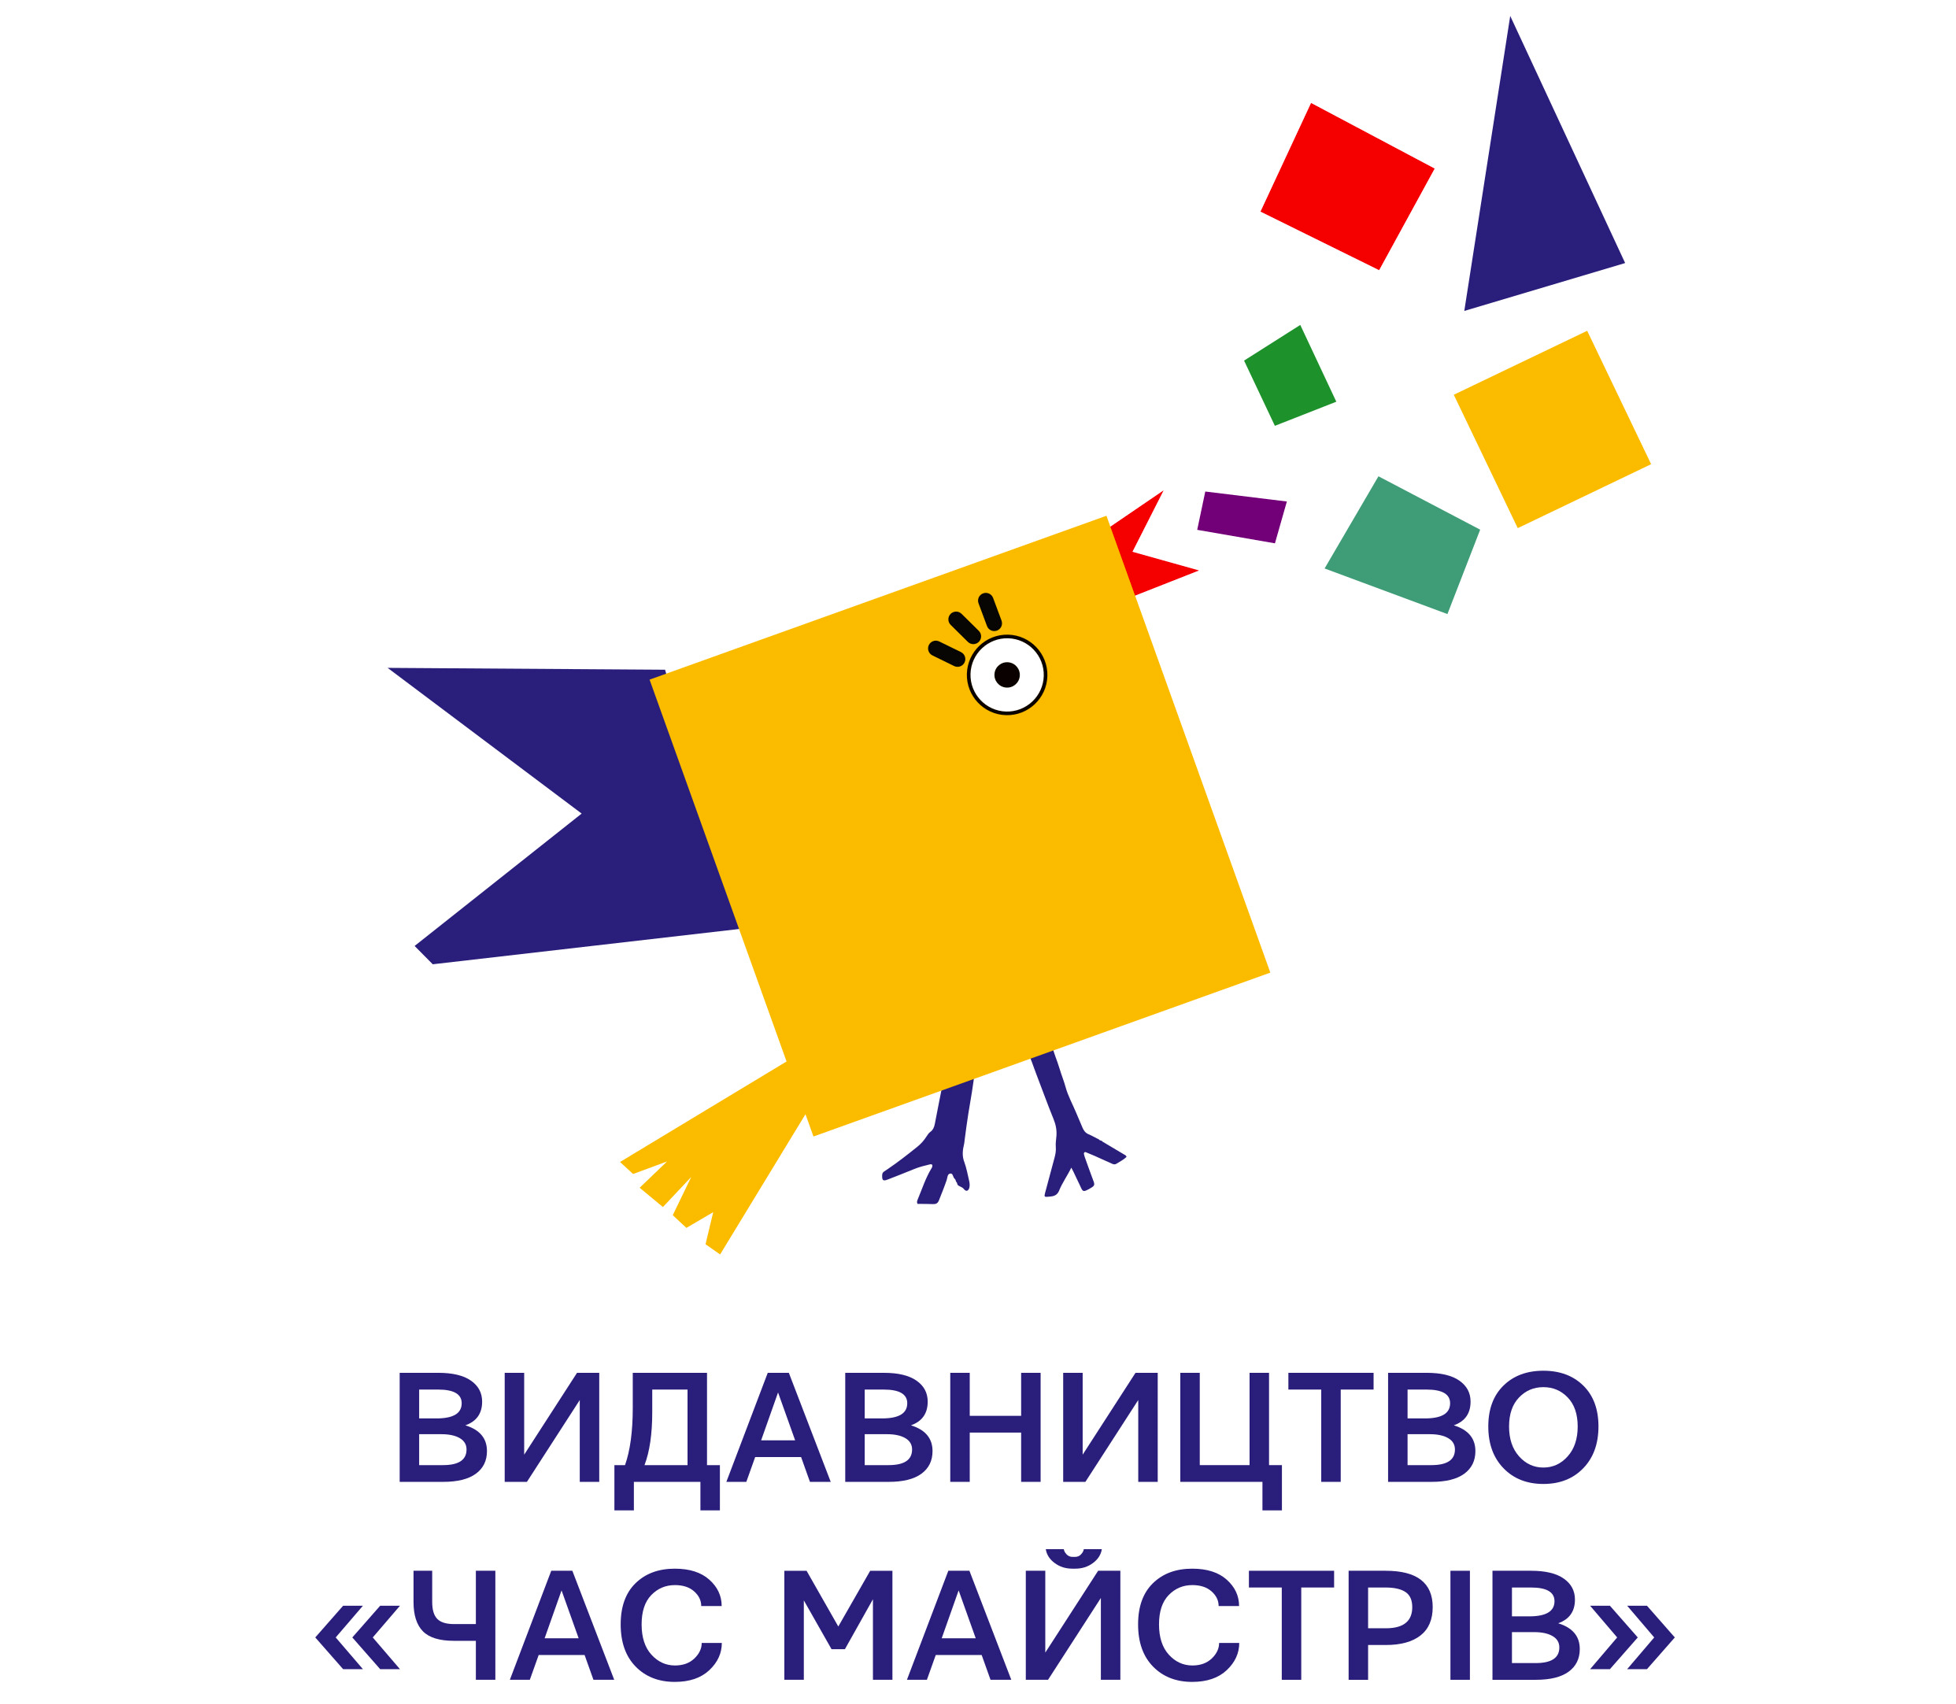 CHAS MAISTRIV - Ukrainian Publishing House